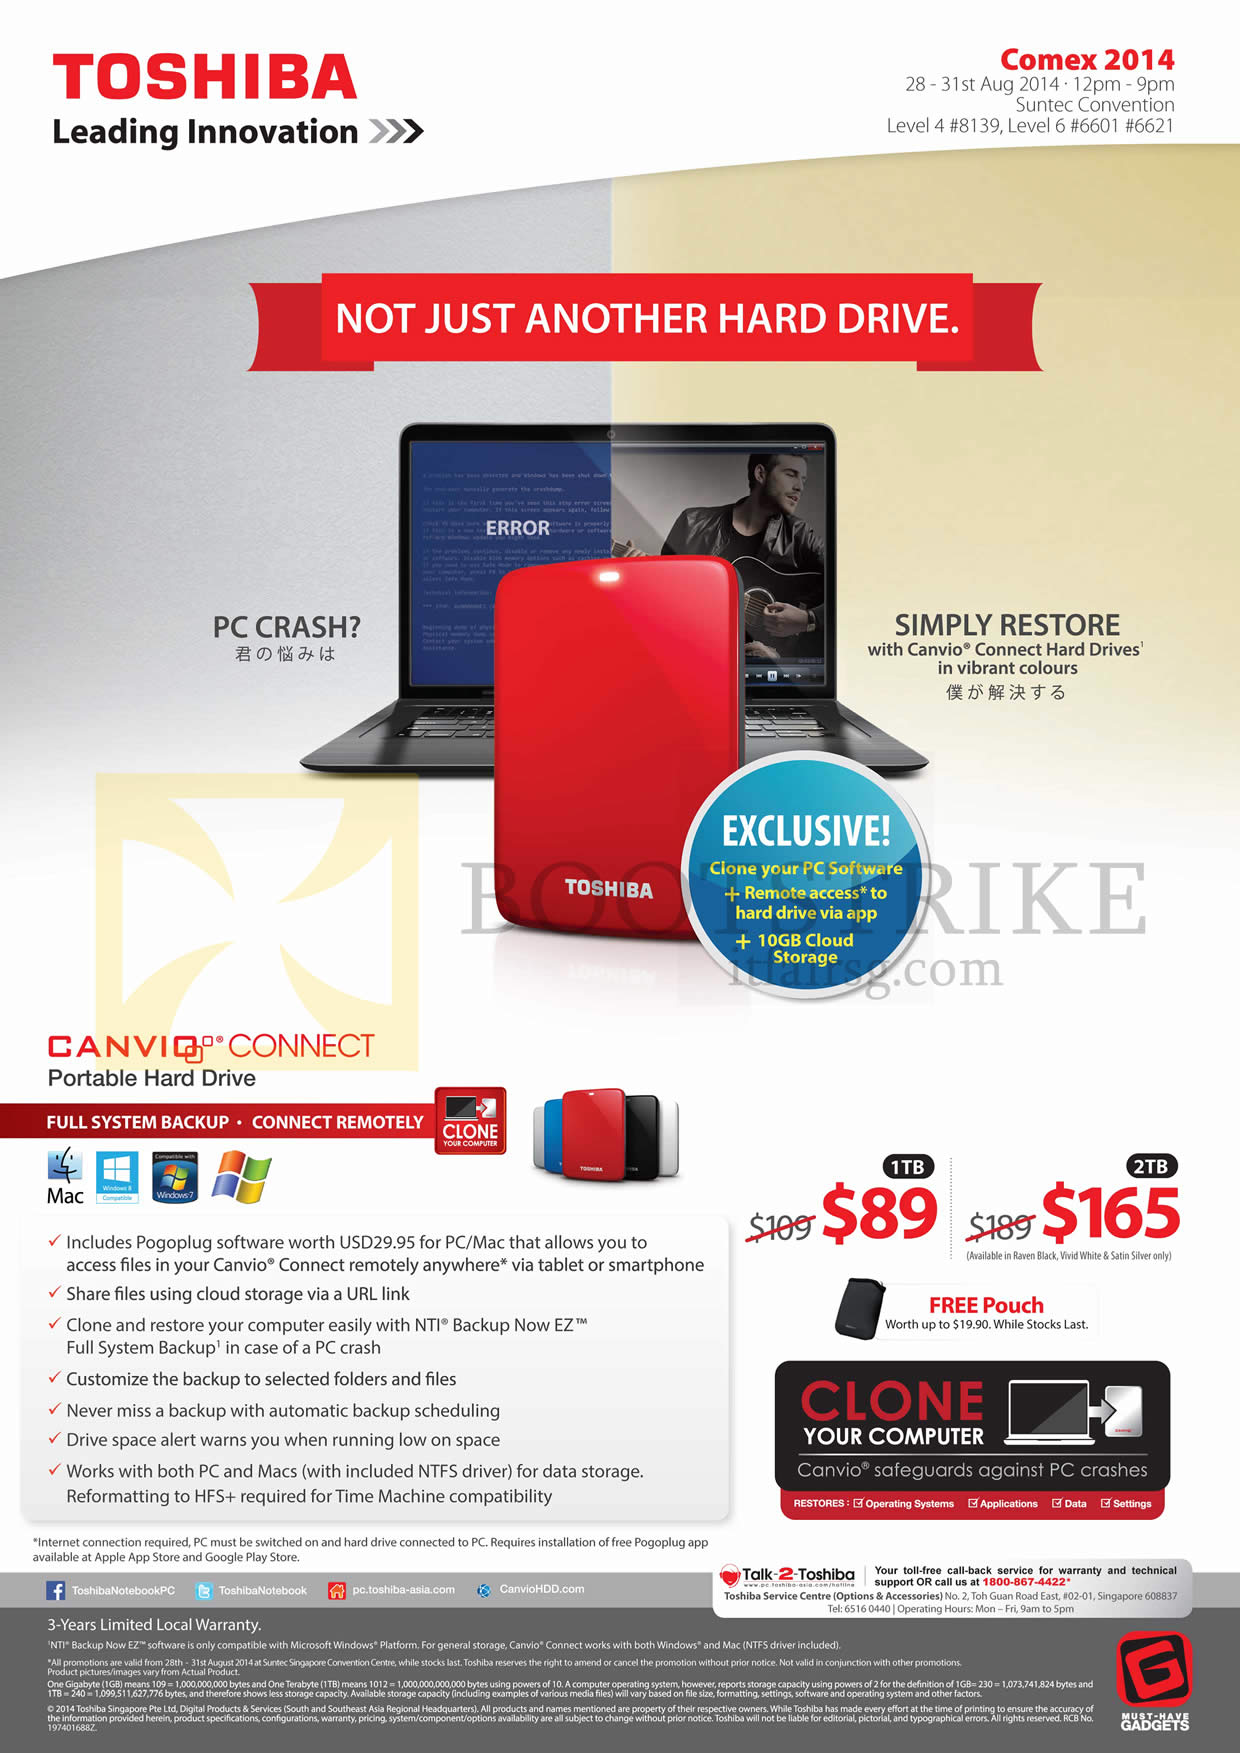 COMEX 2014 price list image brochure of Toshiba External Storage Drive Canvio Connect 1TB 2TB